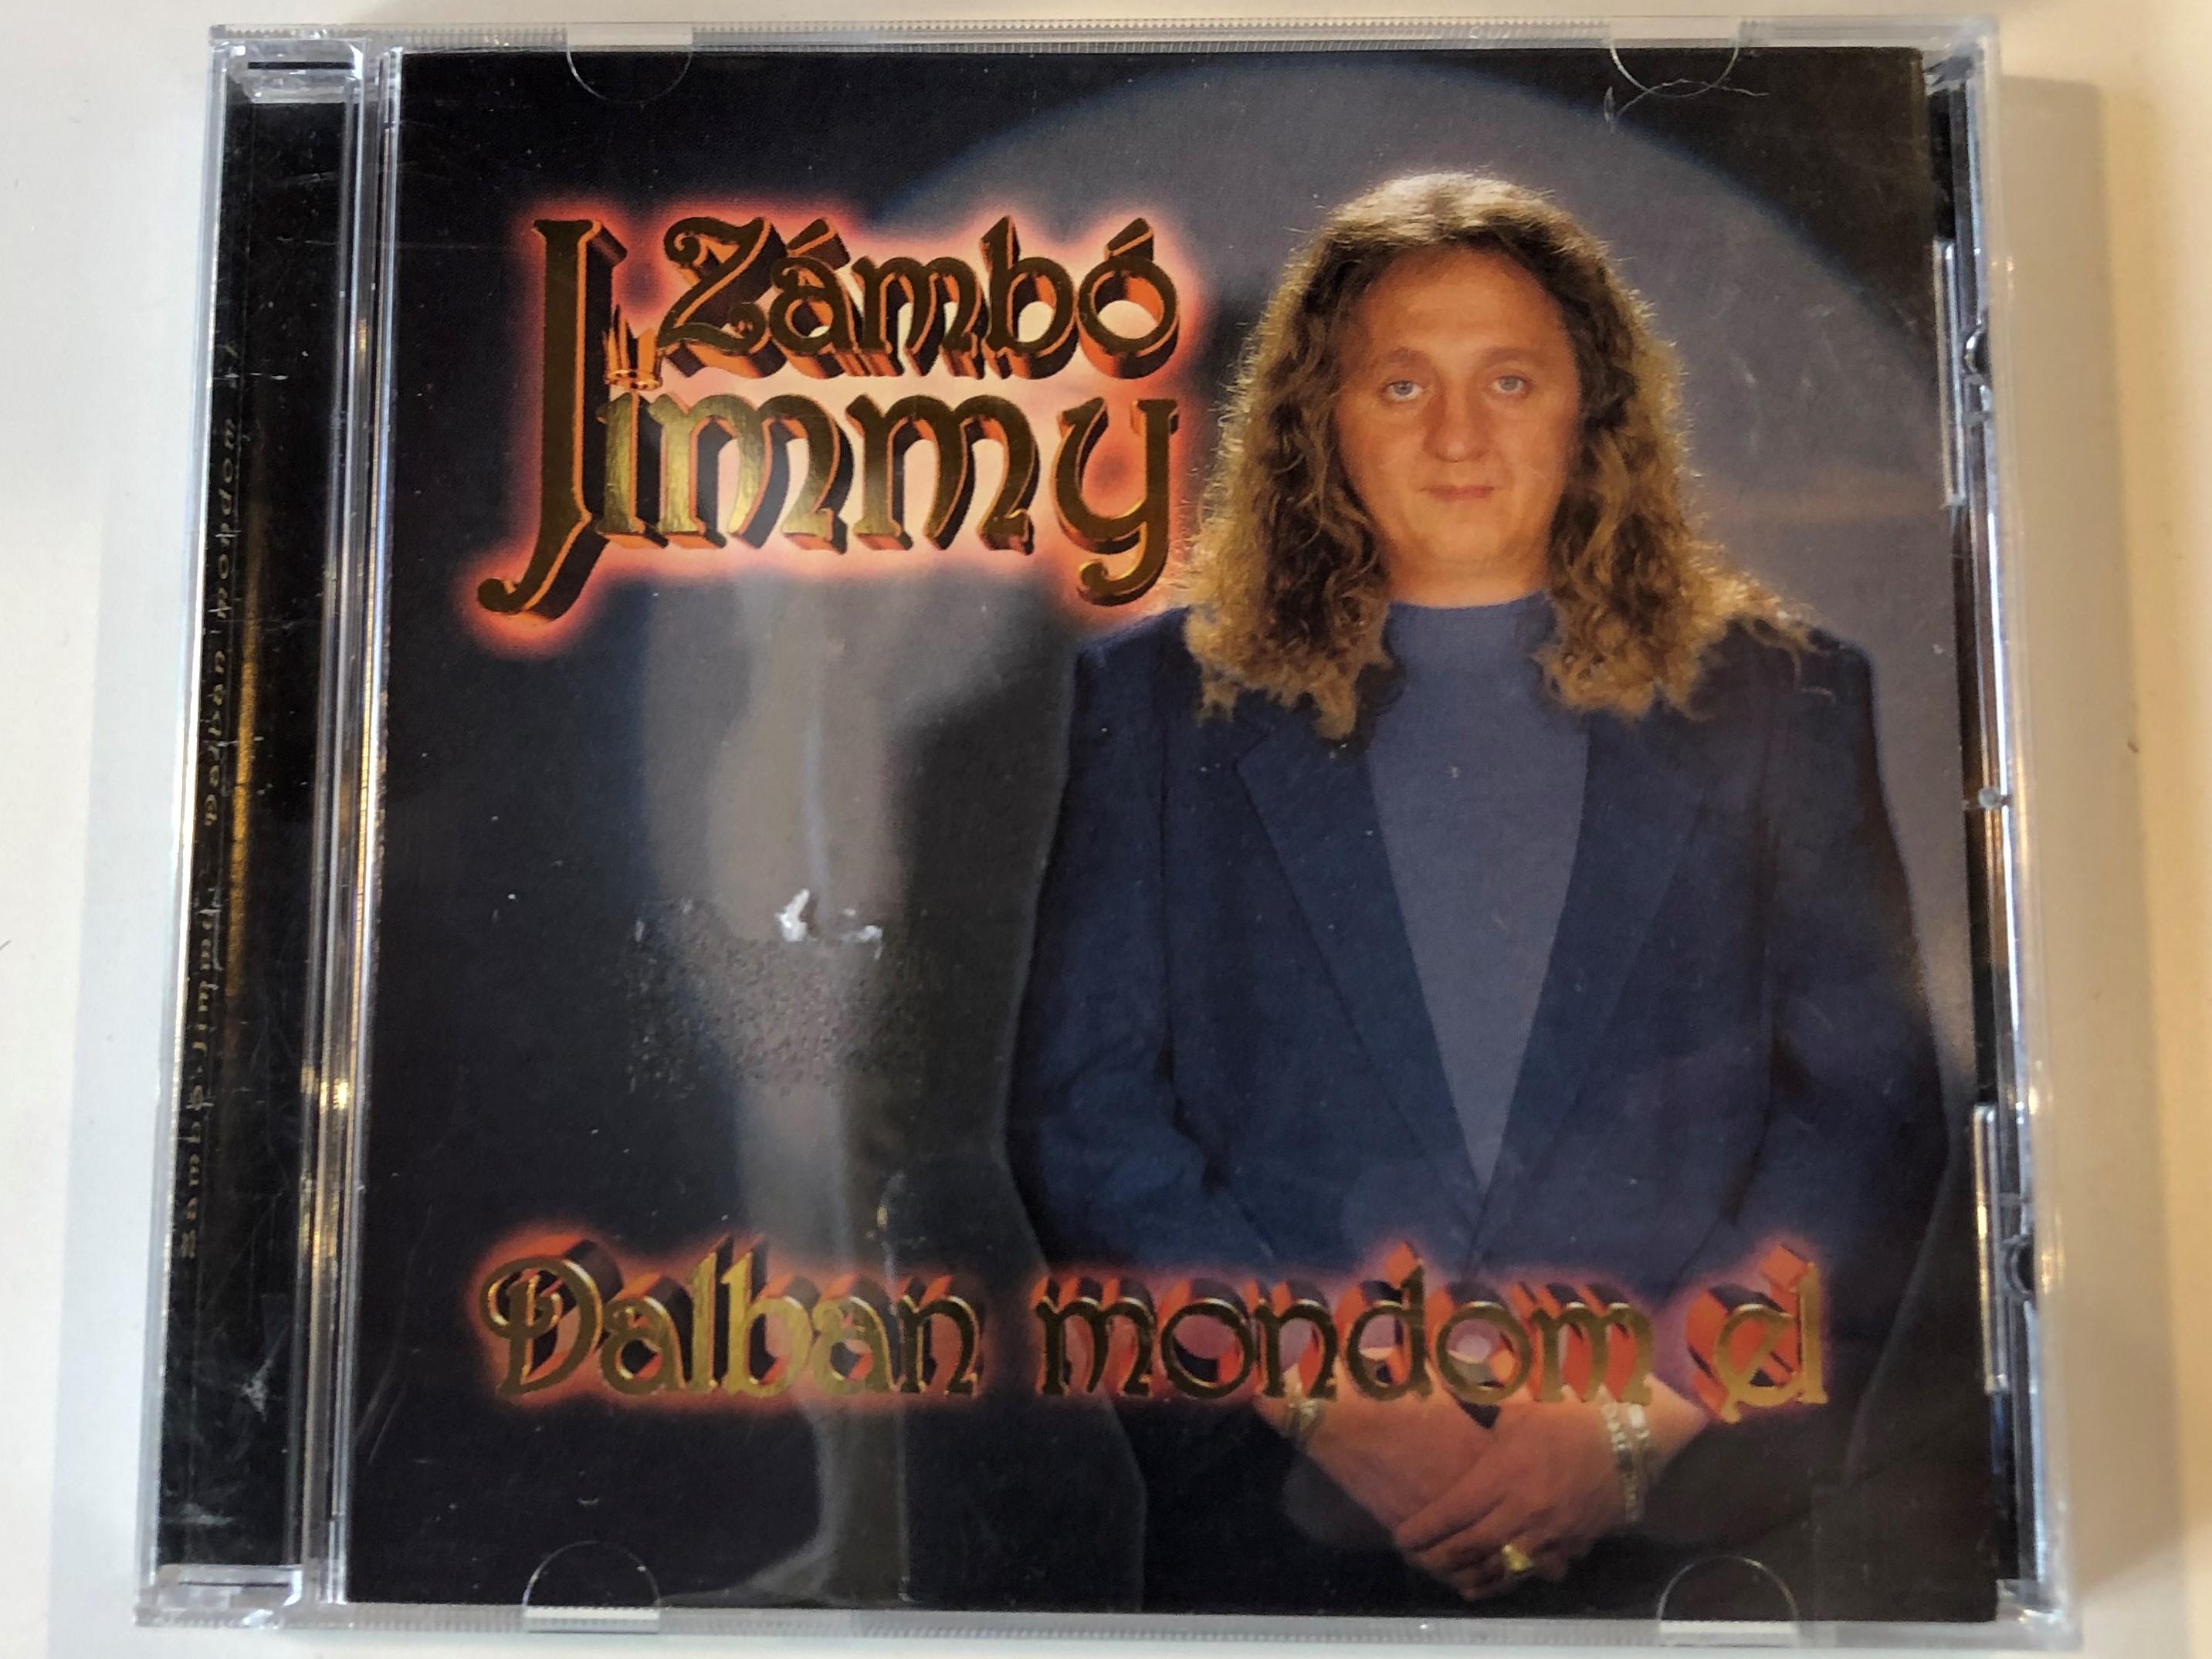 z-mb-jimmy-dalban-mondom-el-magneoton-audio-cd-1999-8573-80693-2-1-.jpg